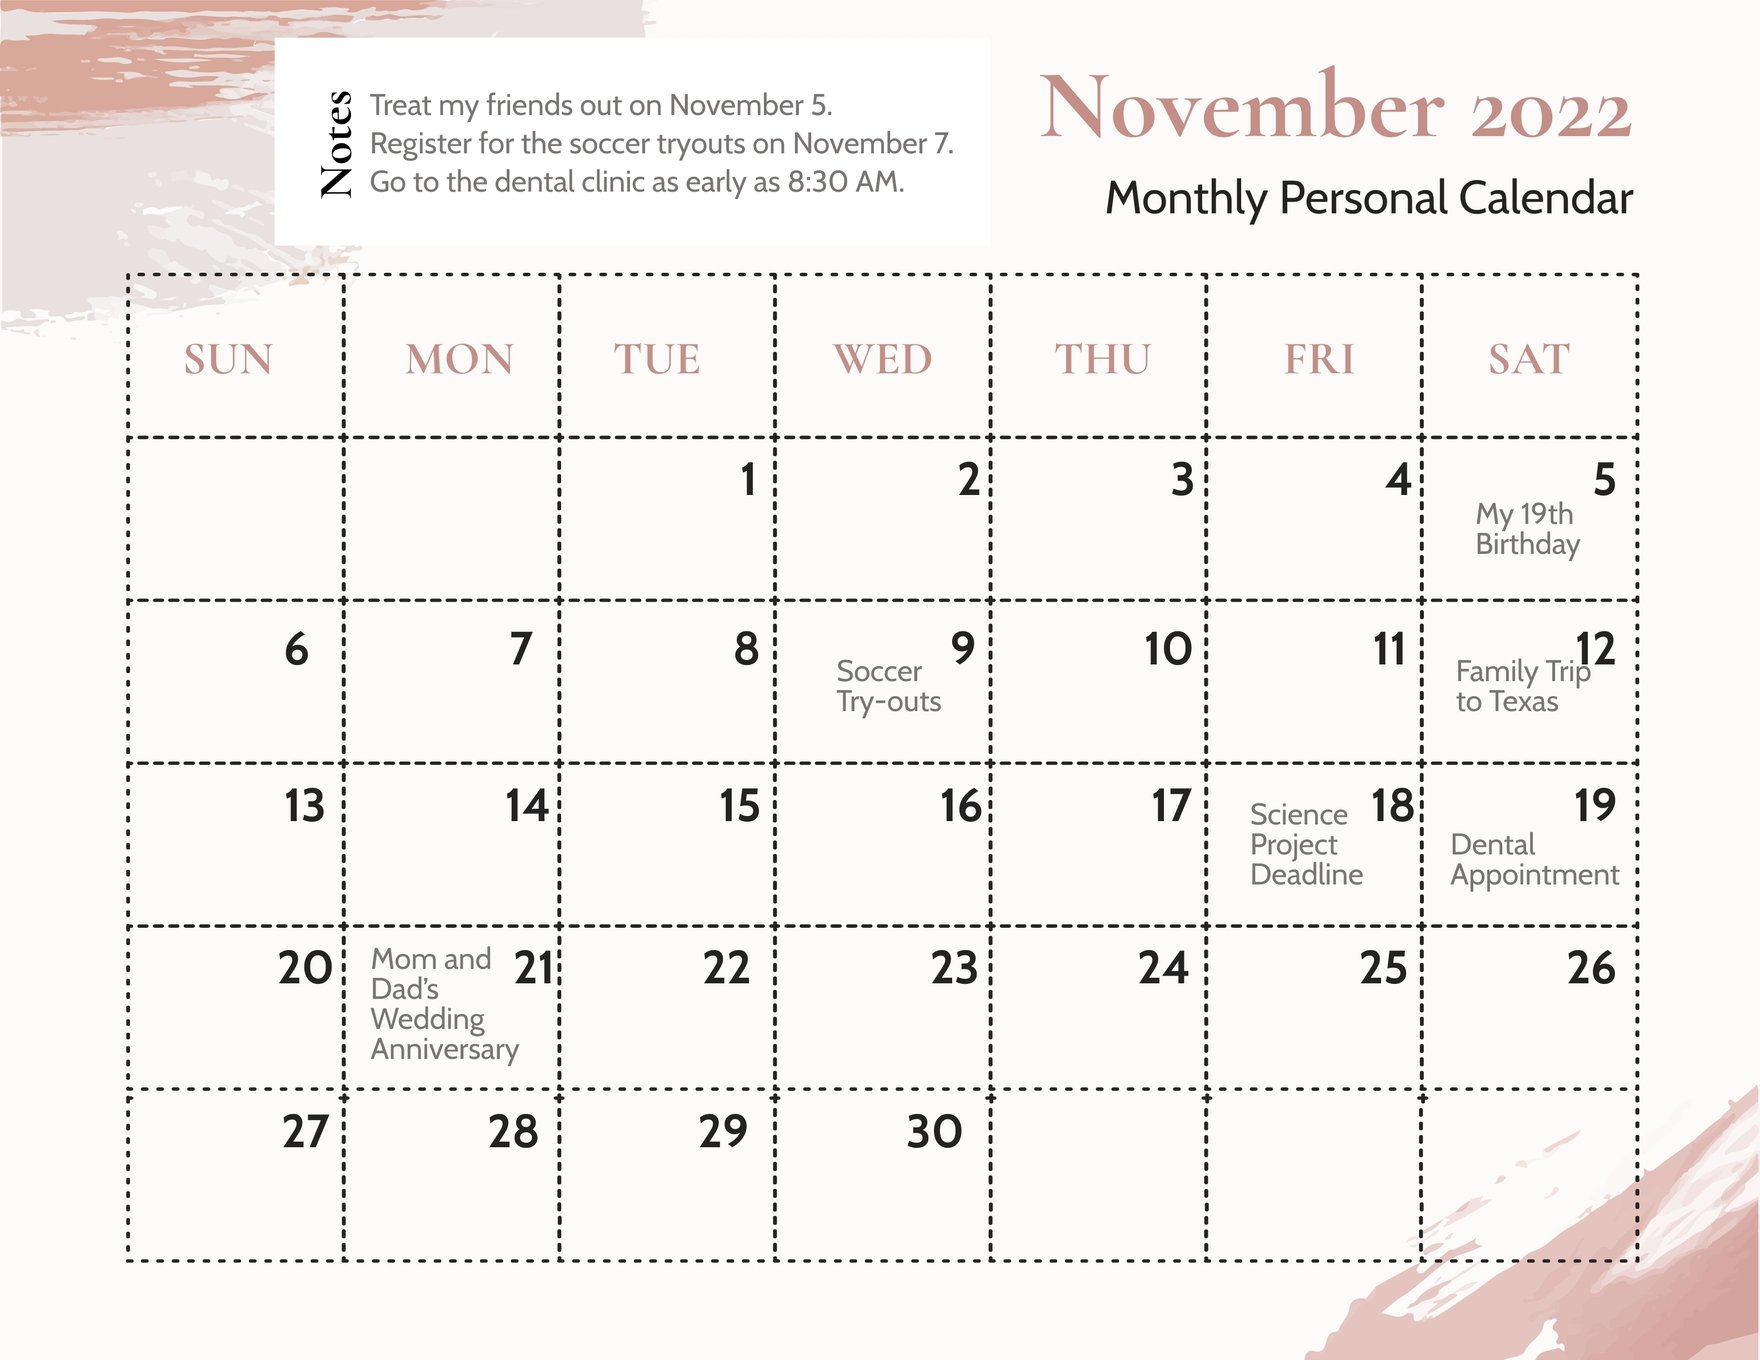 November 2022 Calendar Template With Holidays